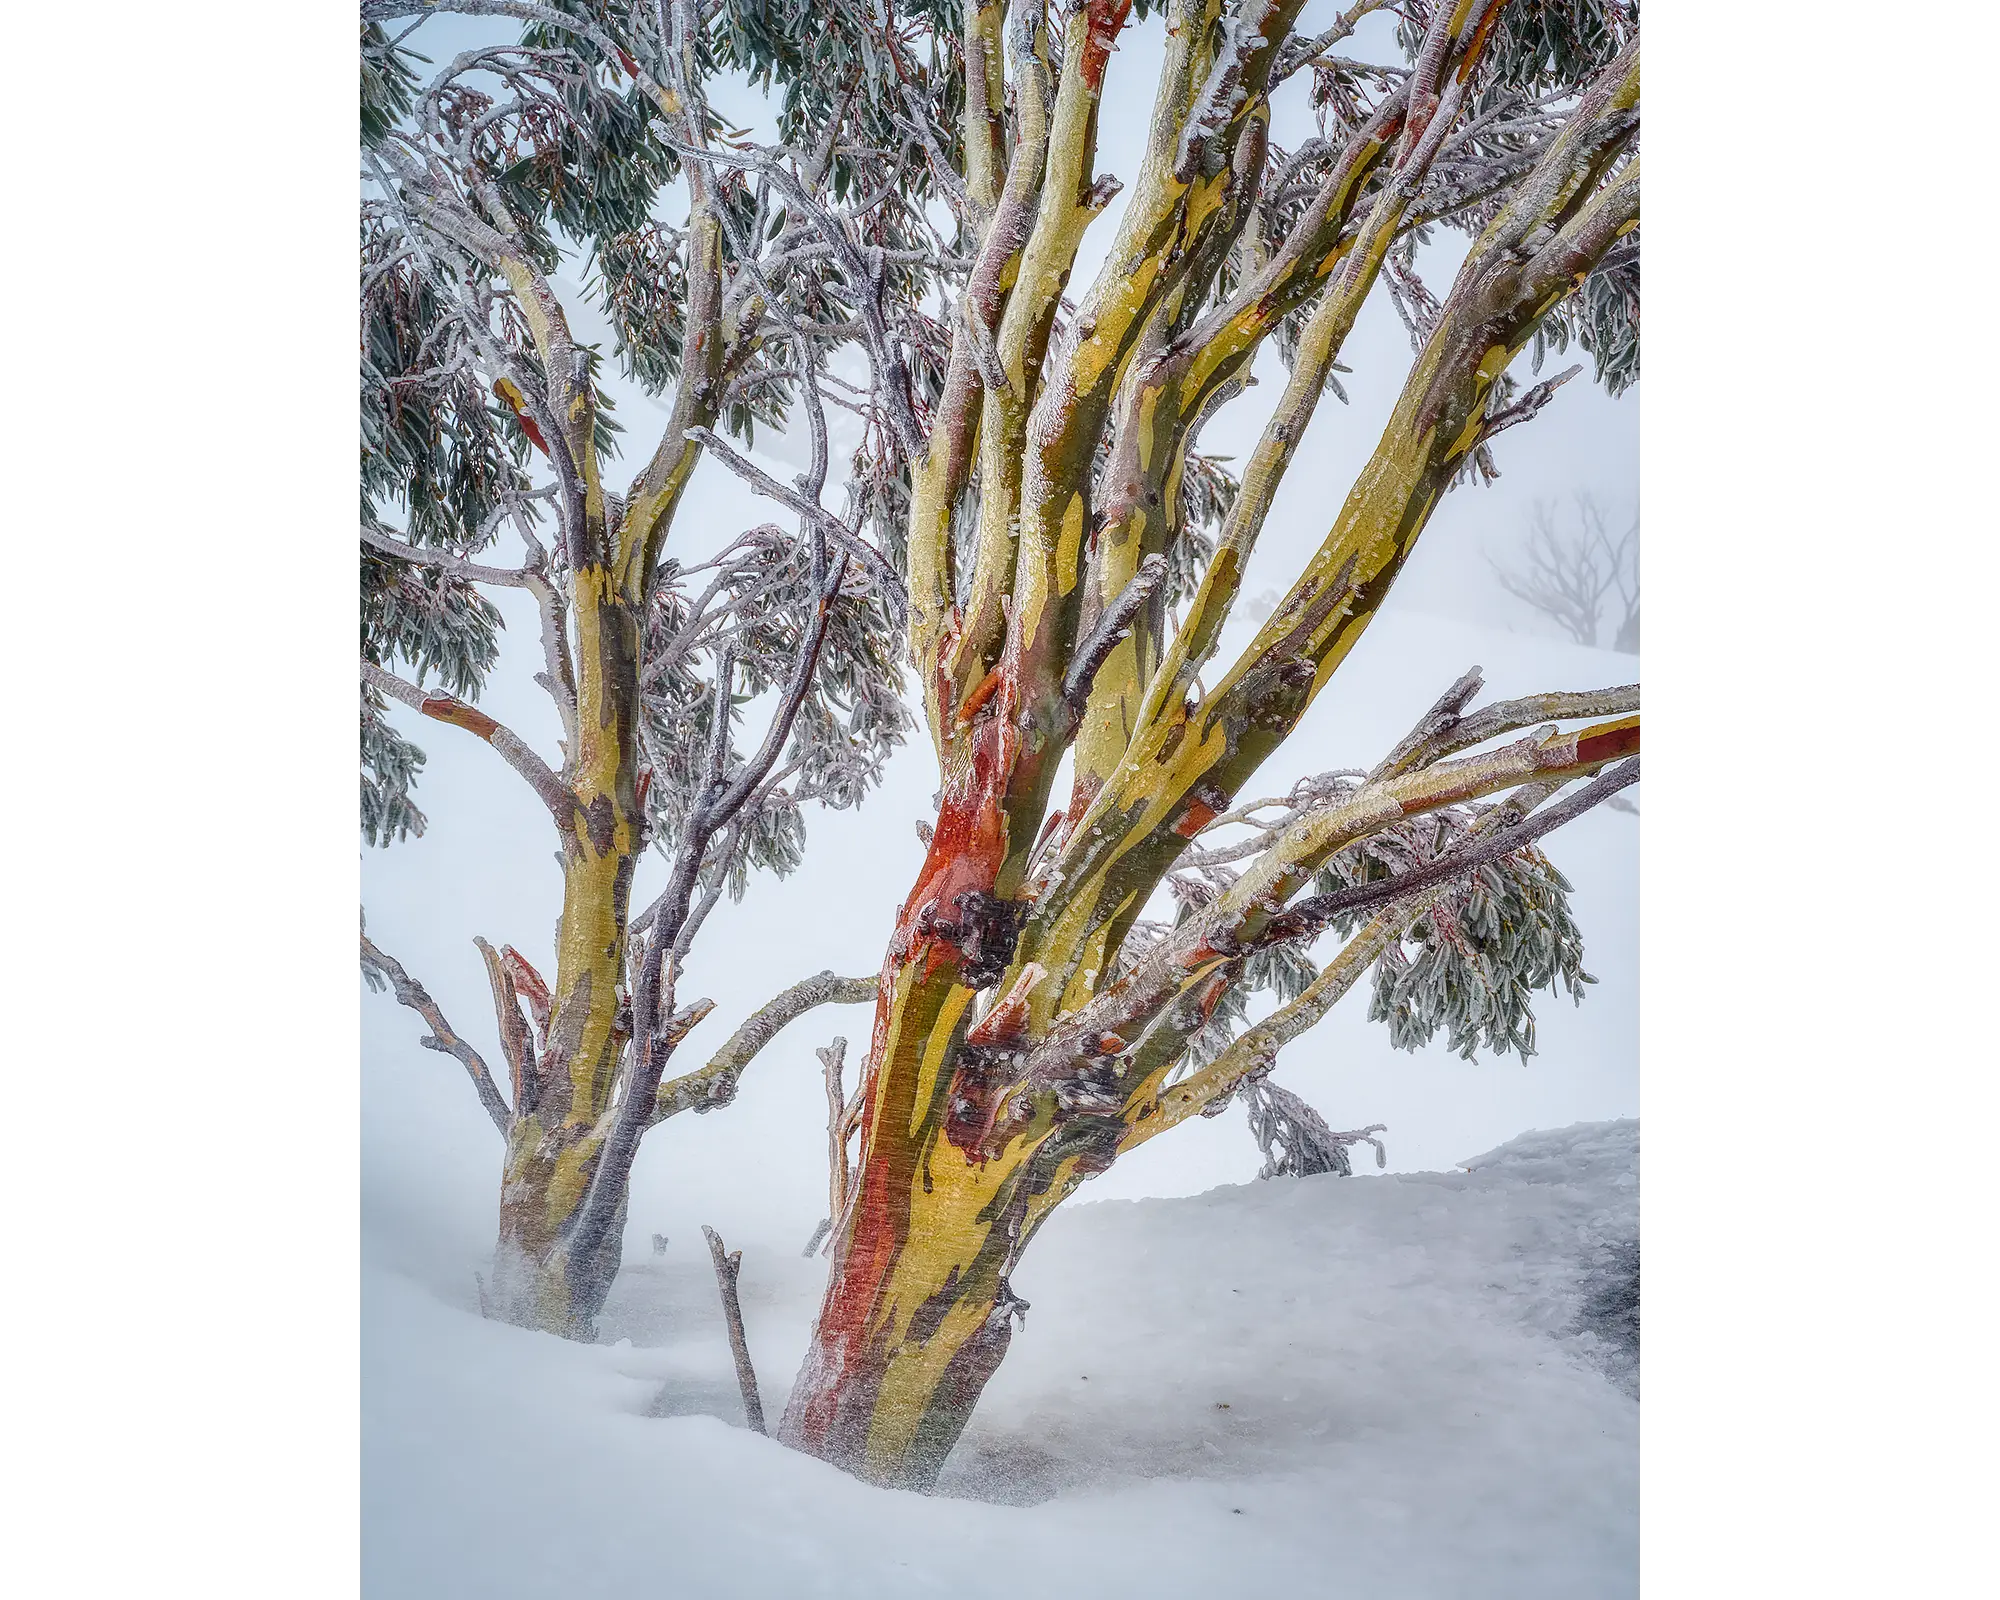 Resilience - Snow gum in snow storm, Kosciuszko National Park.